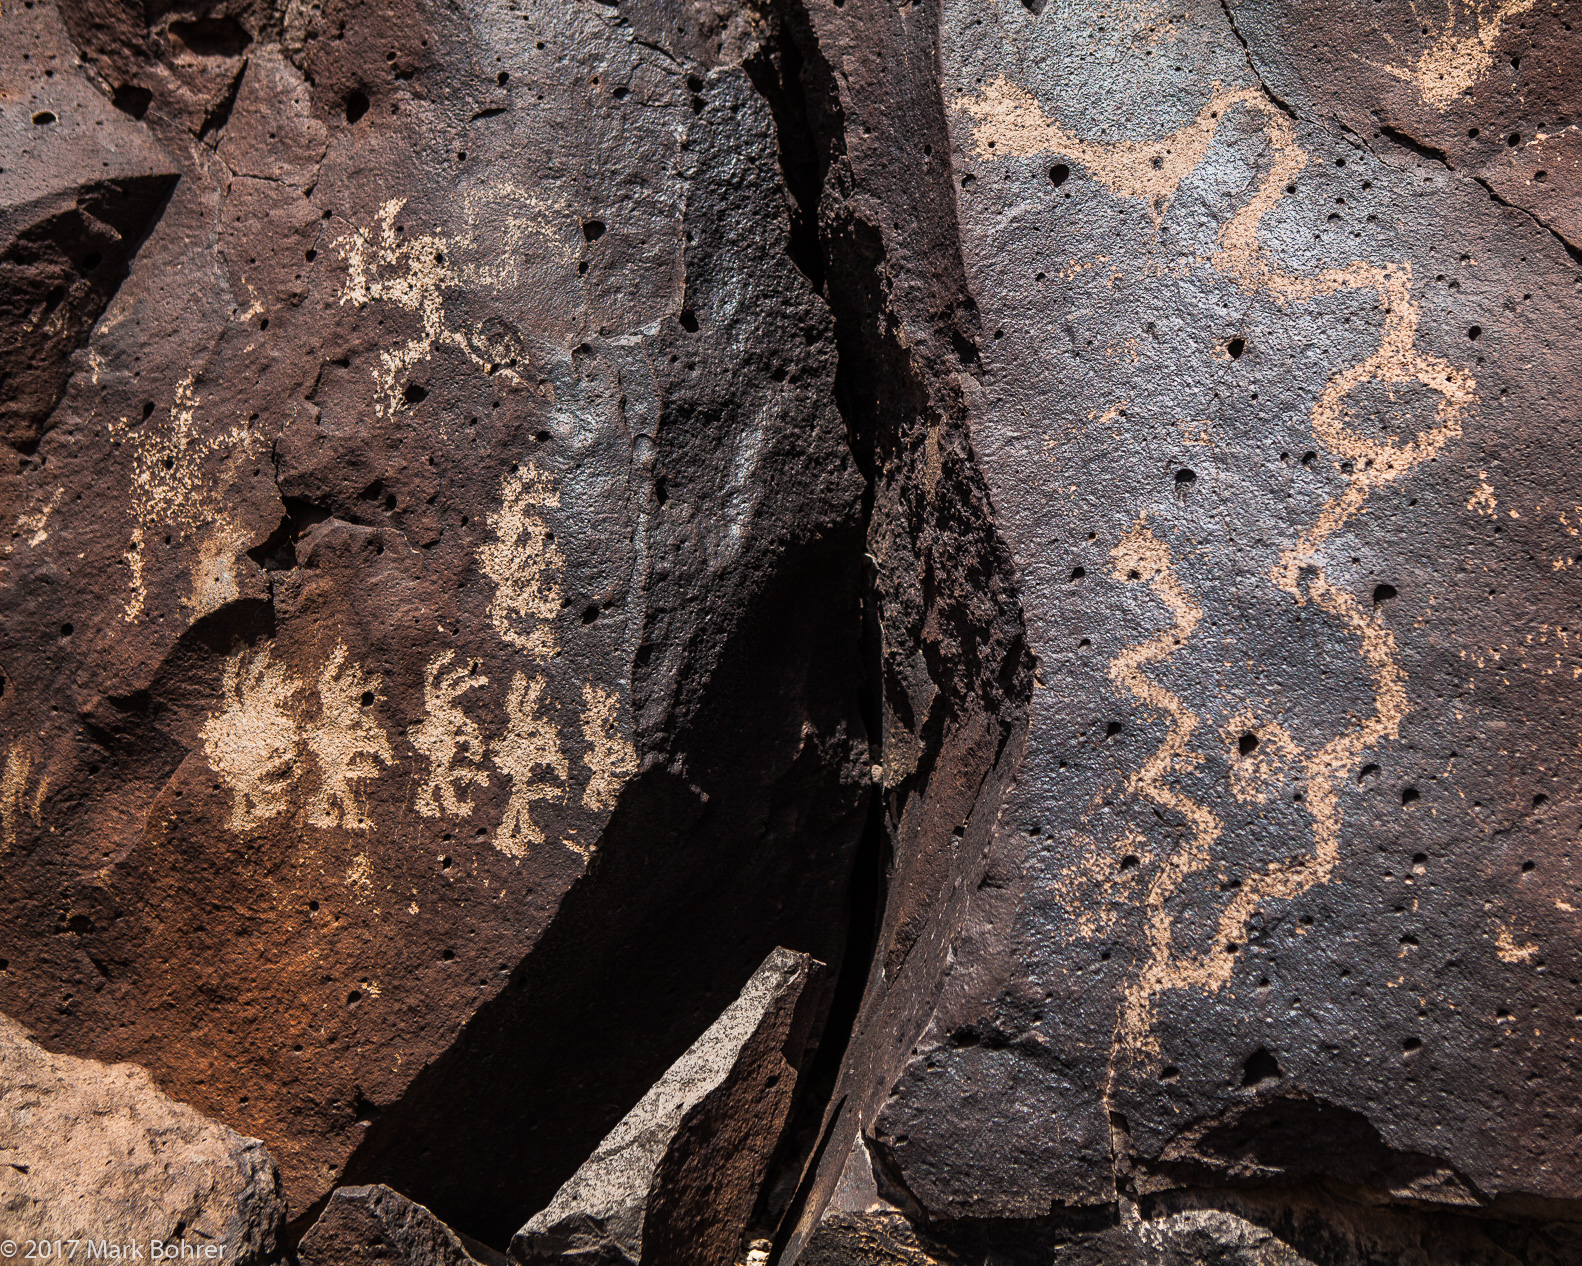 Kokopellis and snakes - La Cieneguilla Petroglyph Site